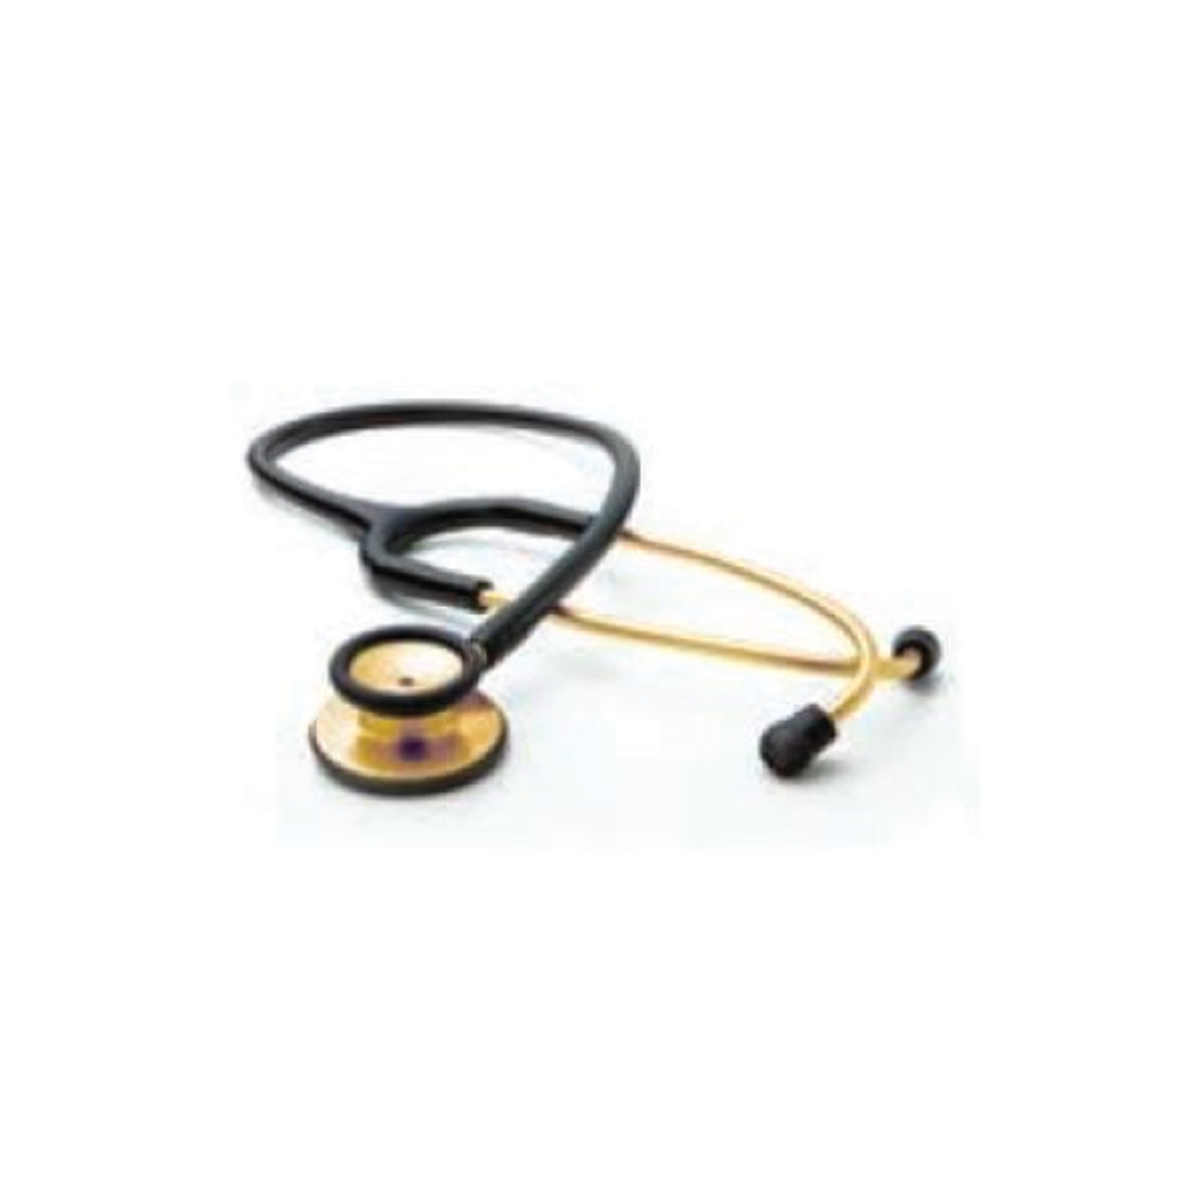 ADC Adscope 603 Adult Stethoscope